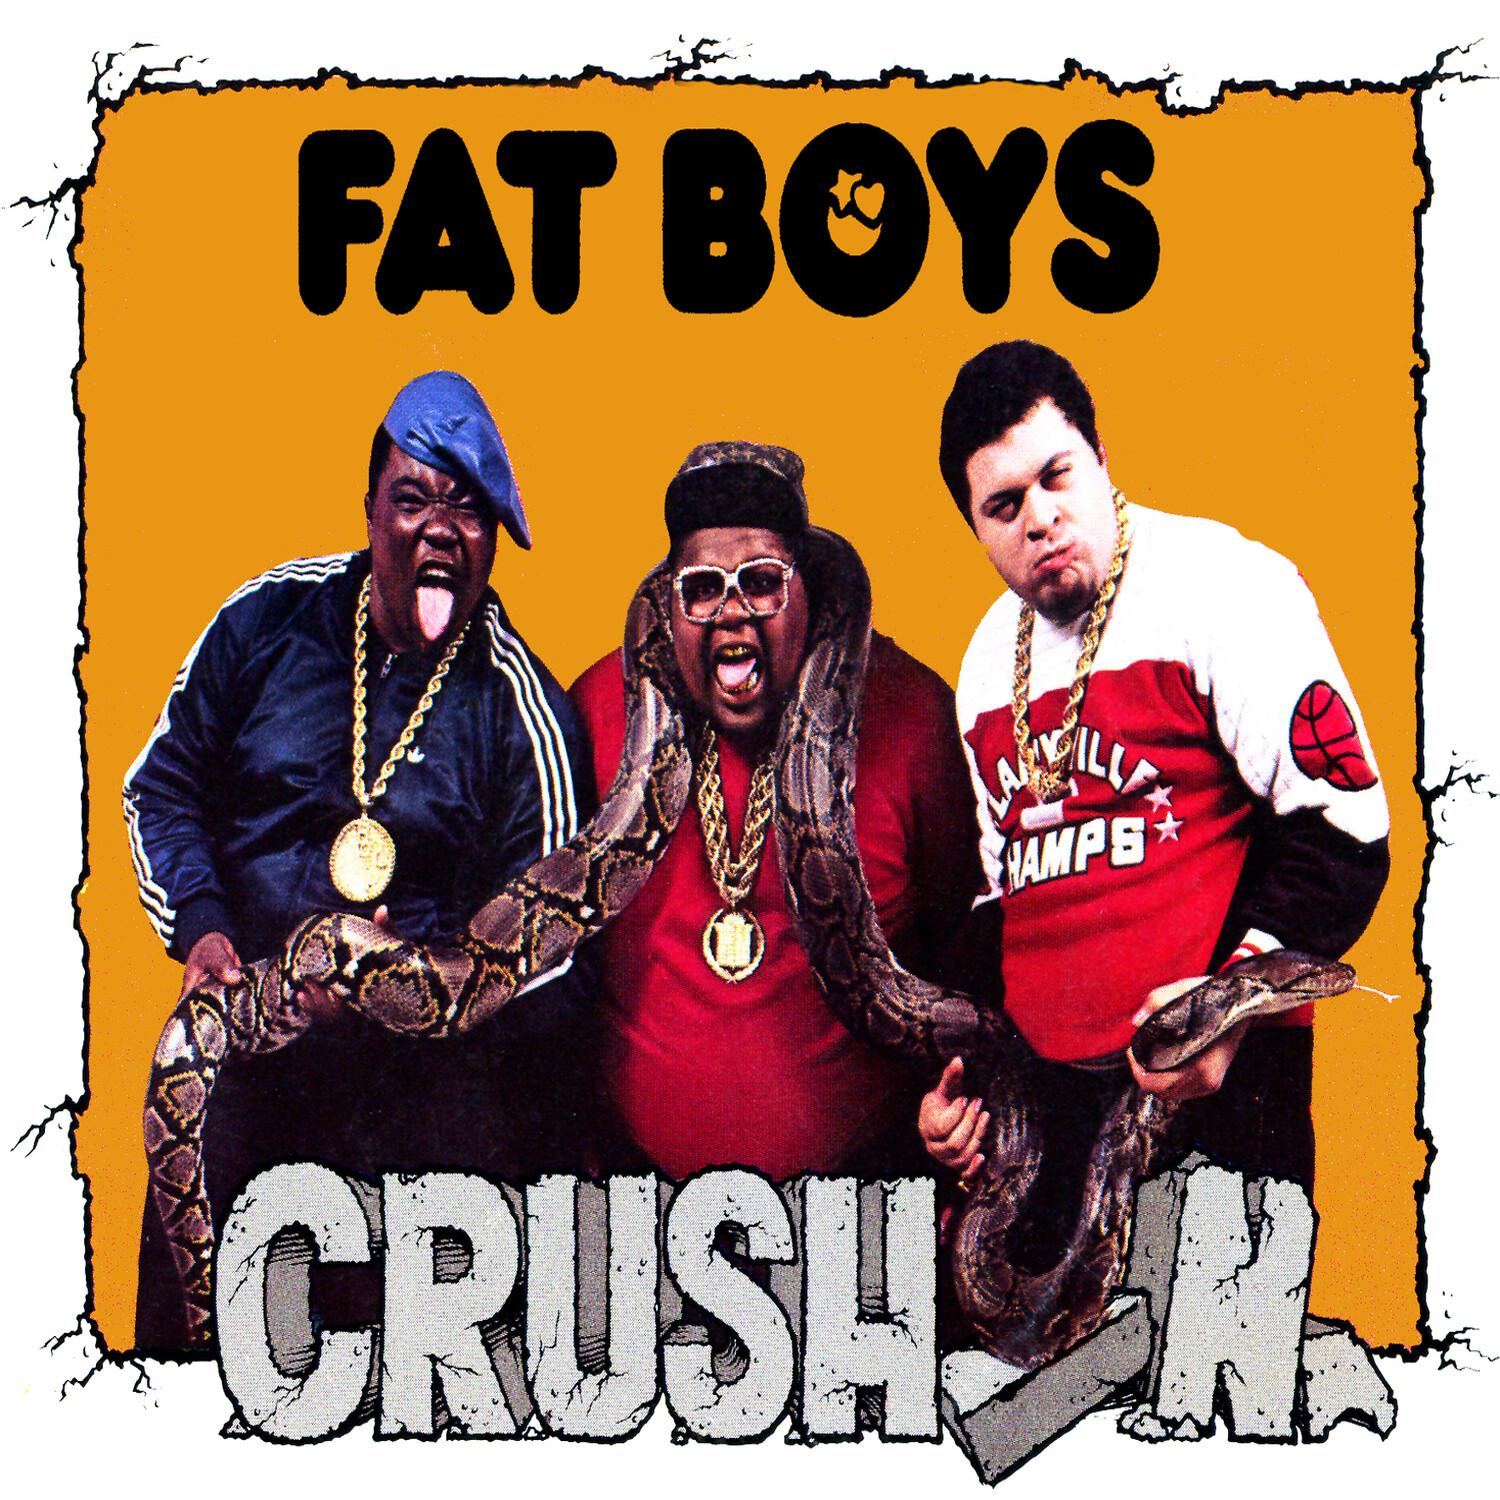 Making Noise歌词 歌手The Fat Boys-专辑Crushin'-单曲《Making Noise》LRC歌词下载